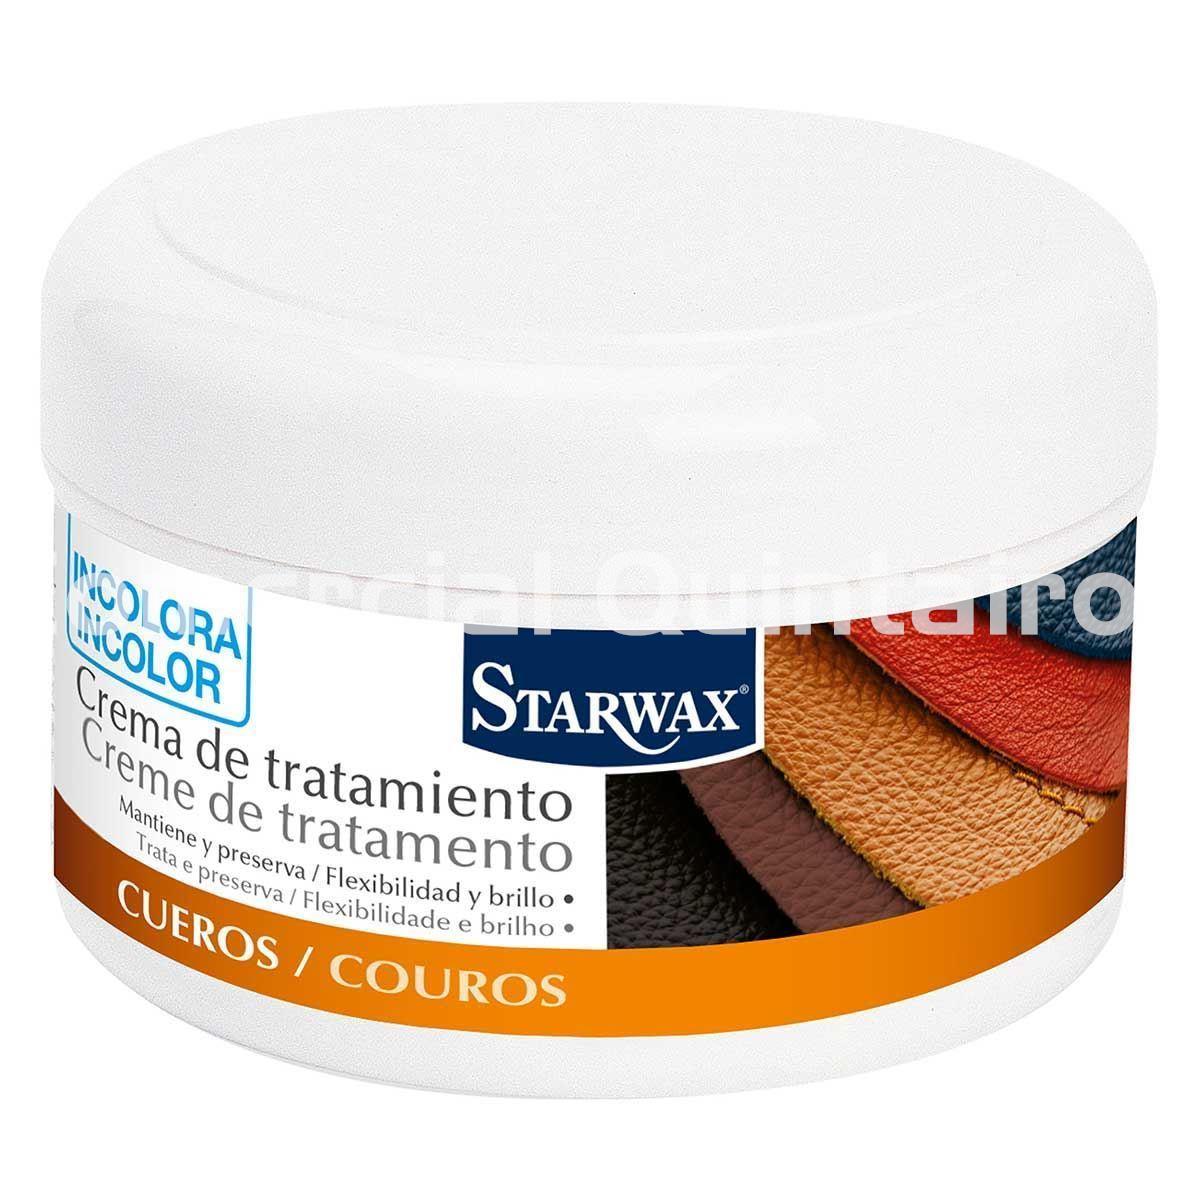 STARWAX Crema nutritiva para cuero - Imagen 1